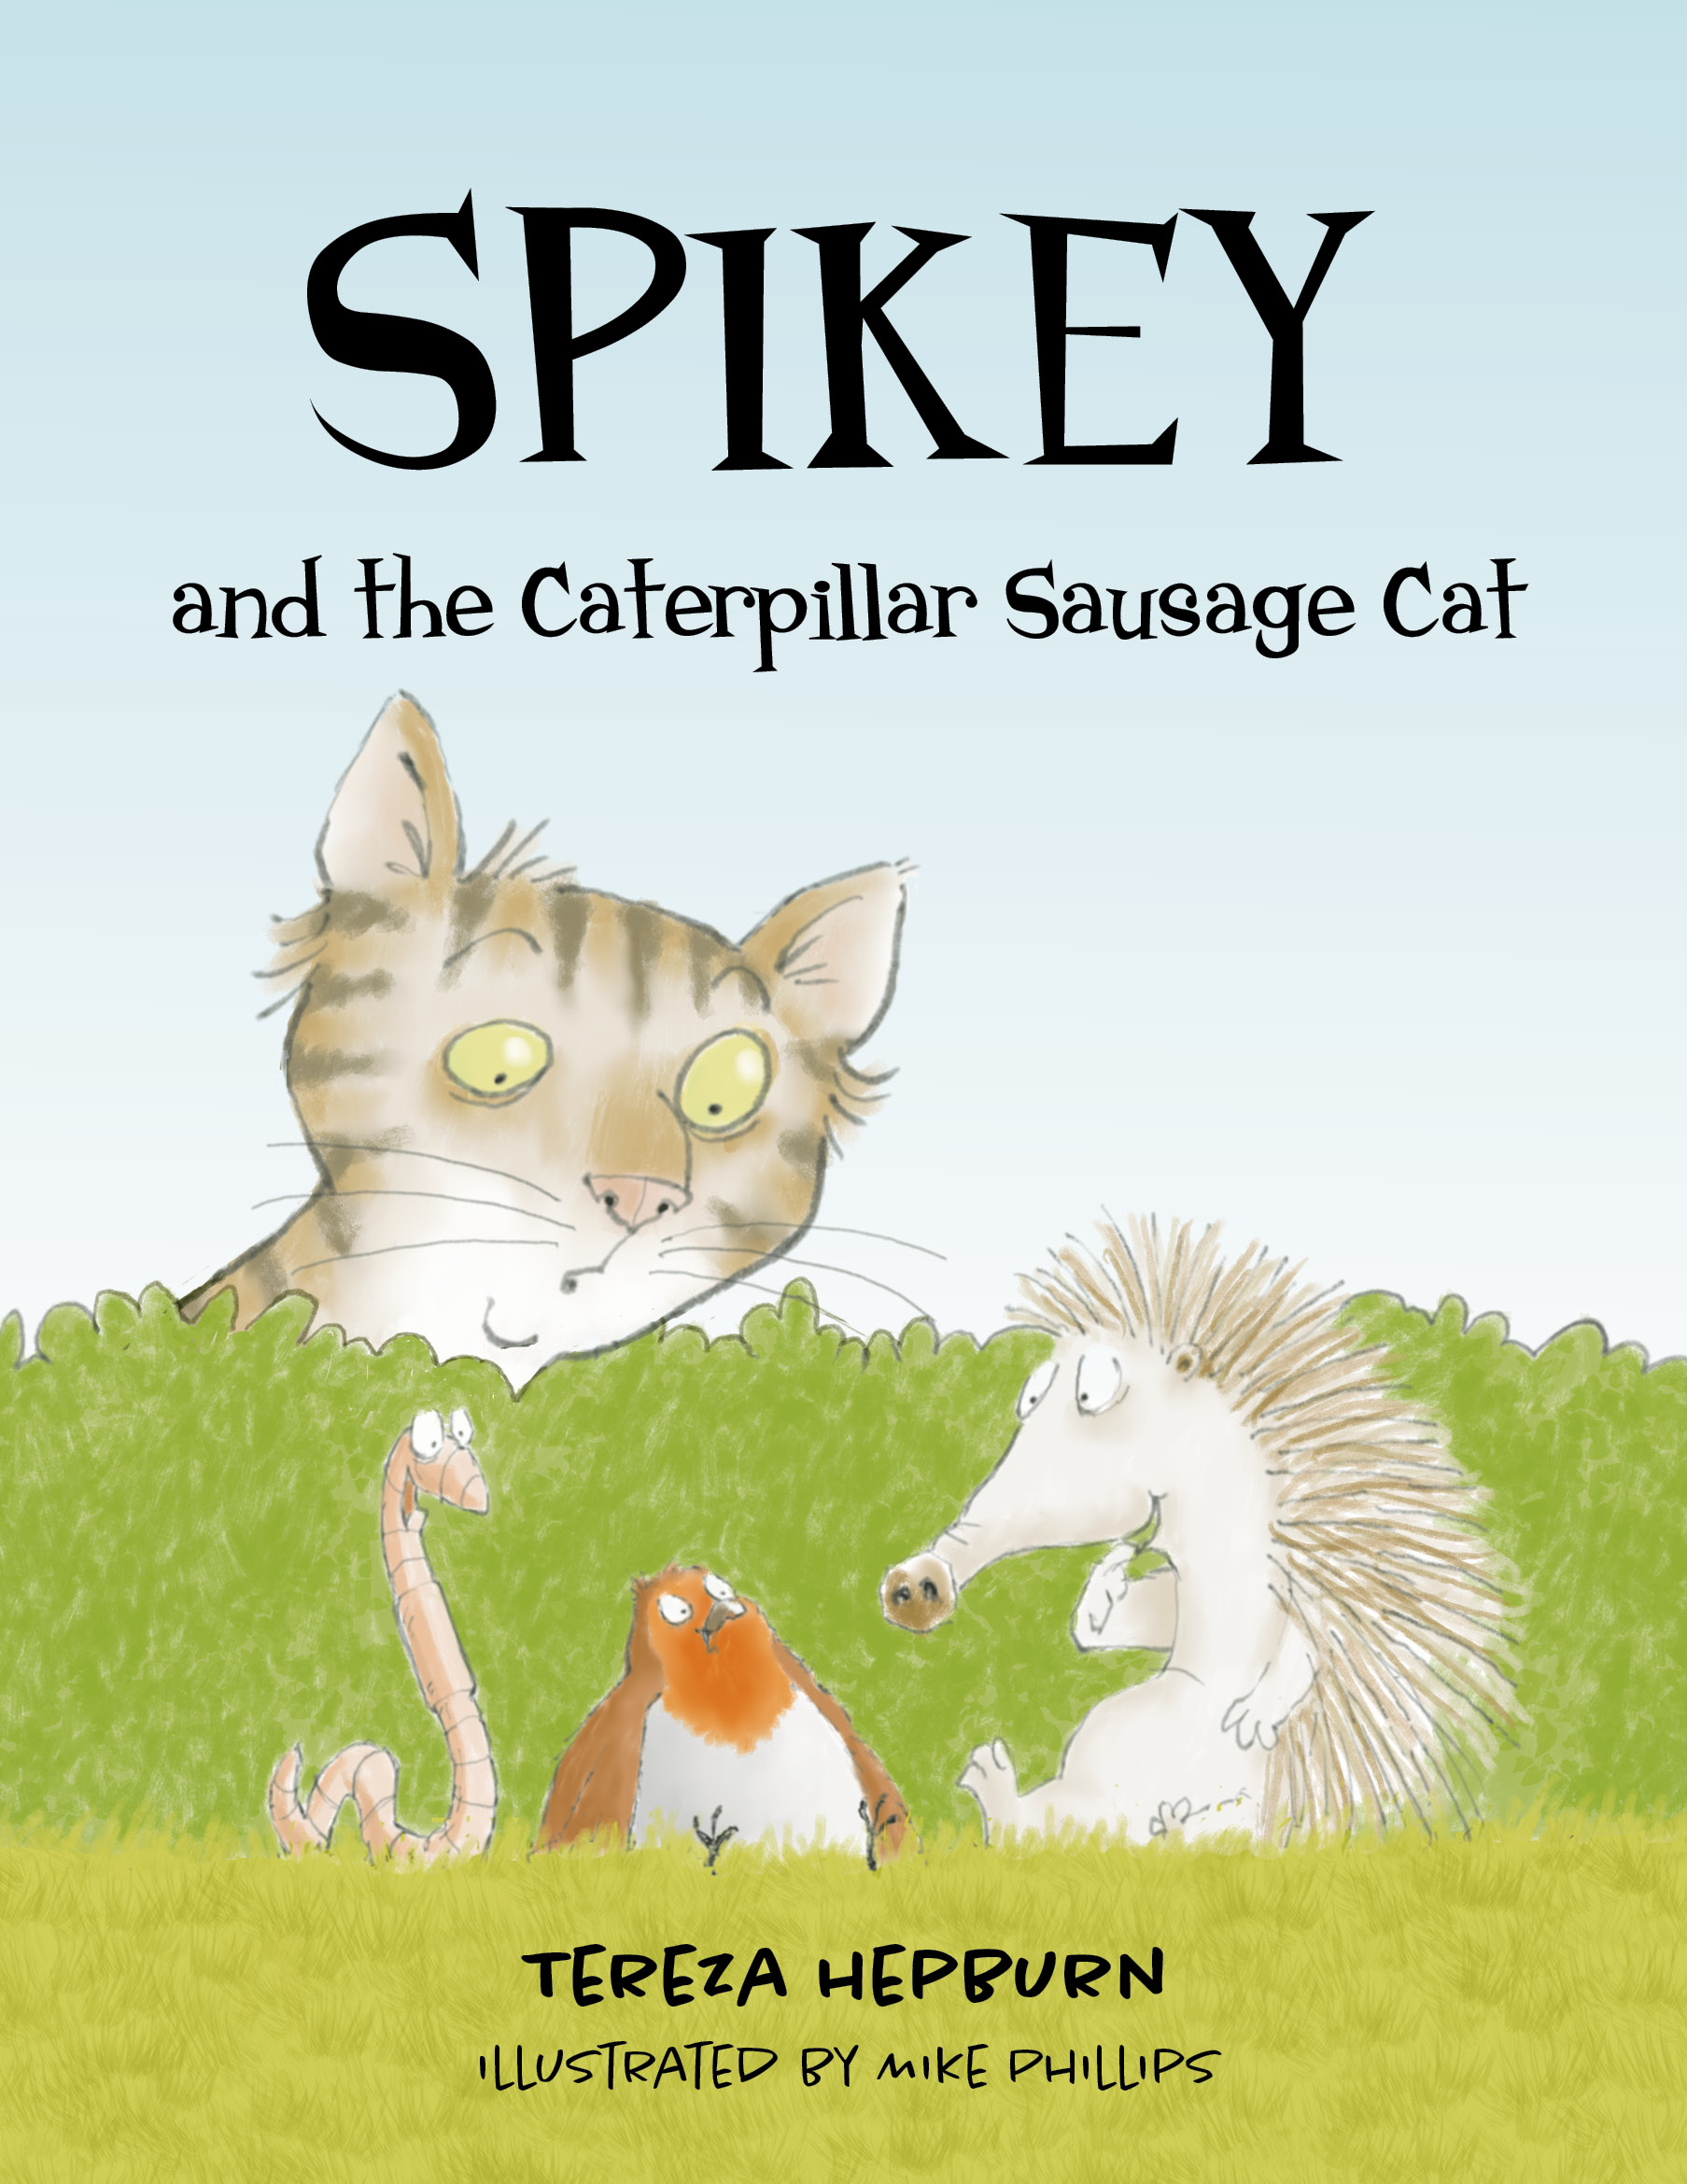 Spikey and the Catepillar Sausage Cat